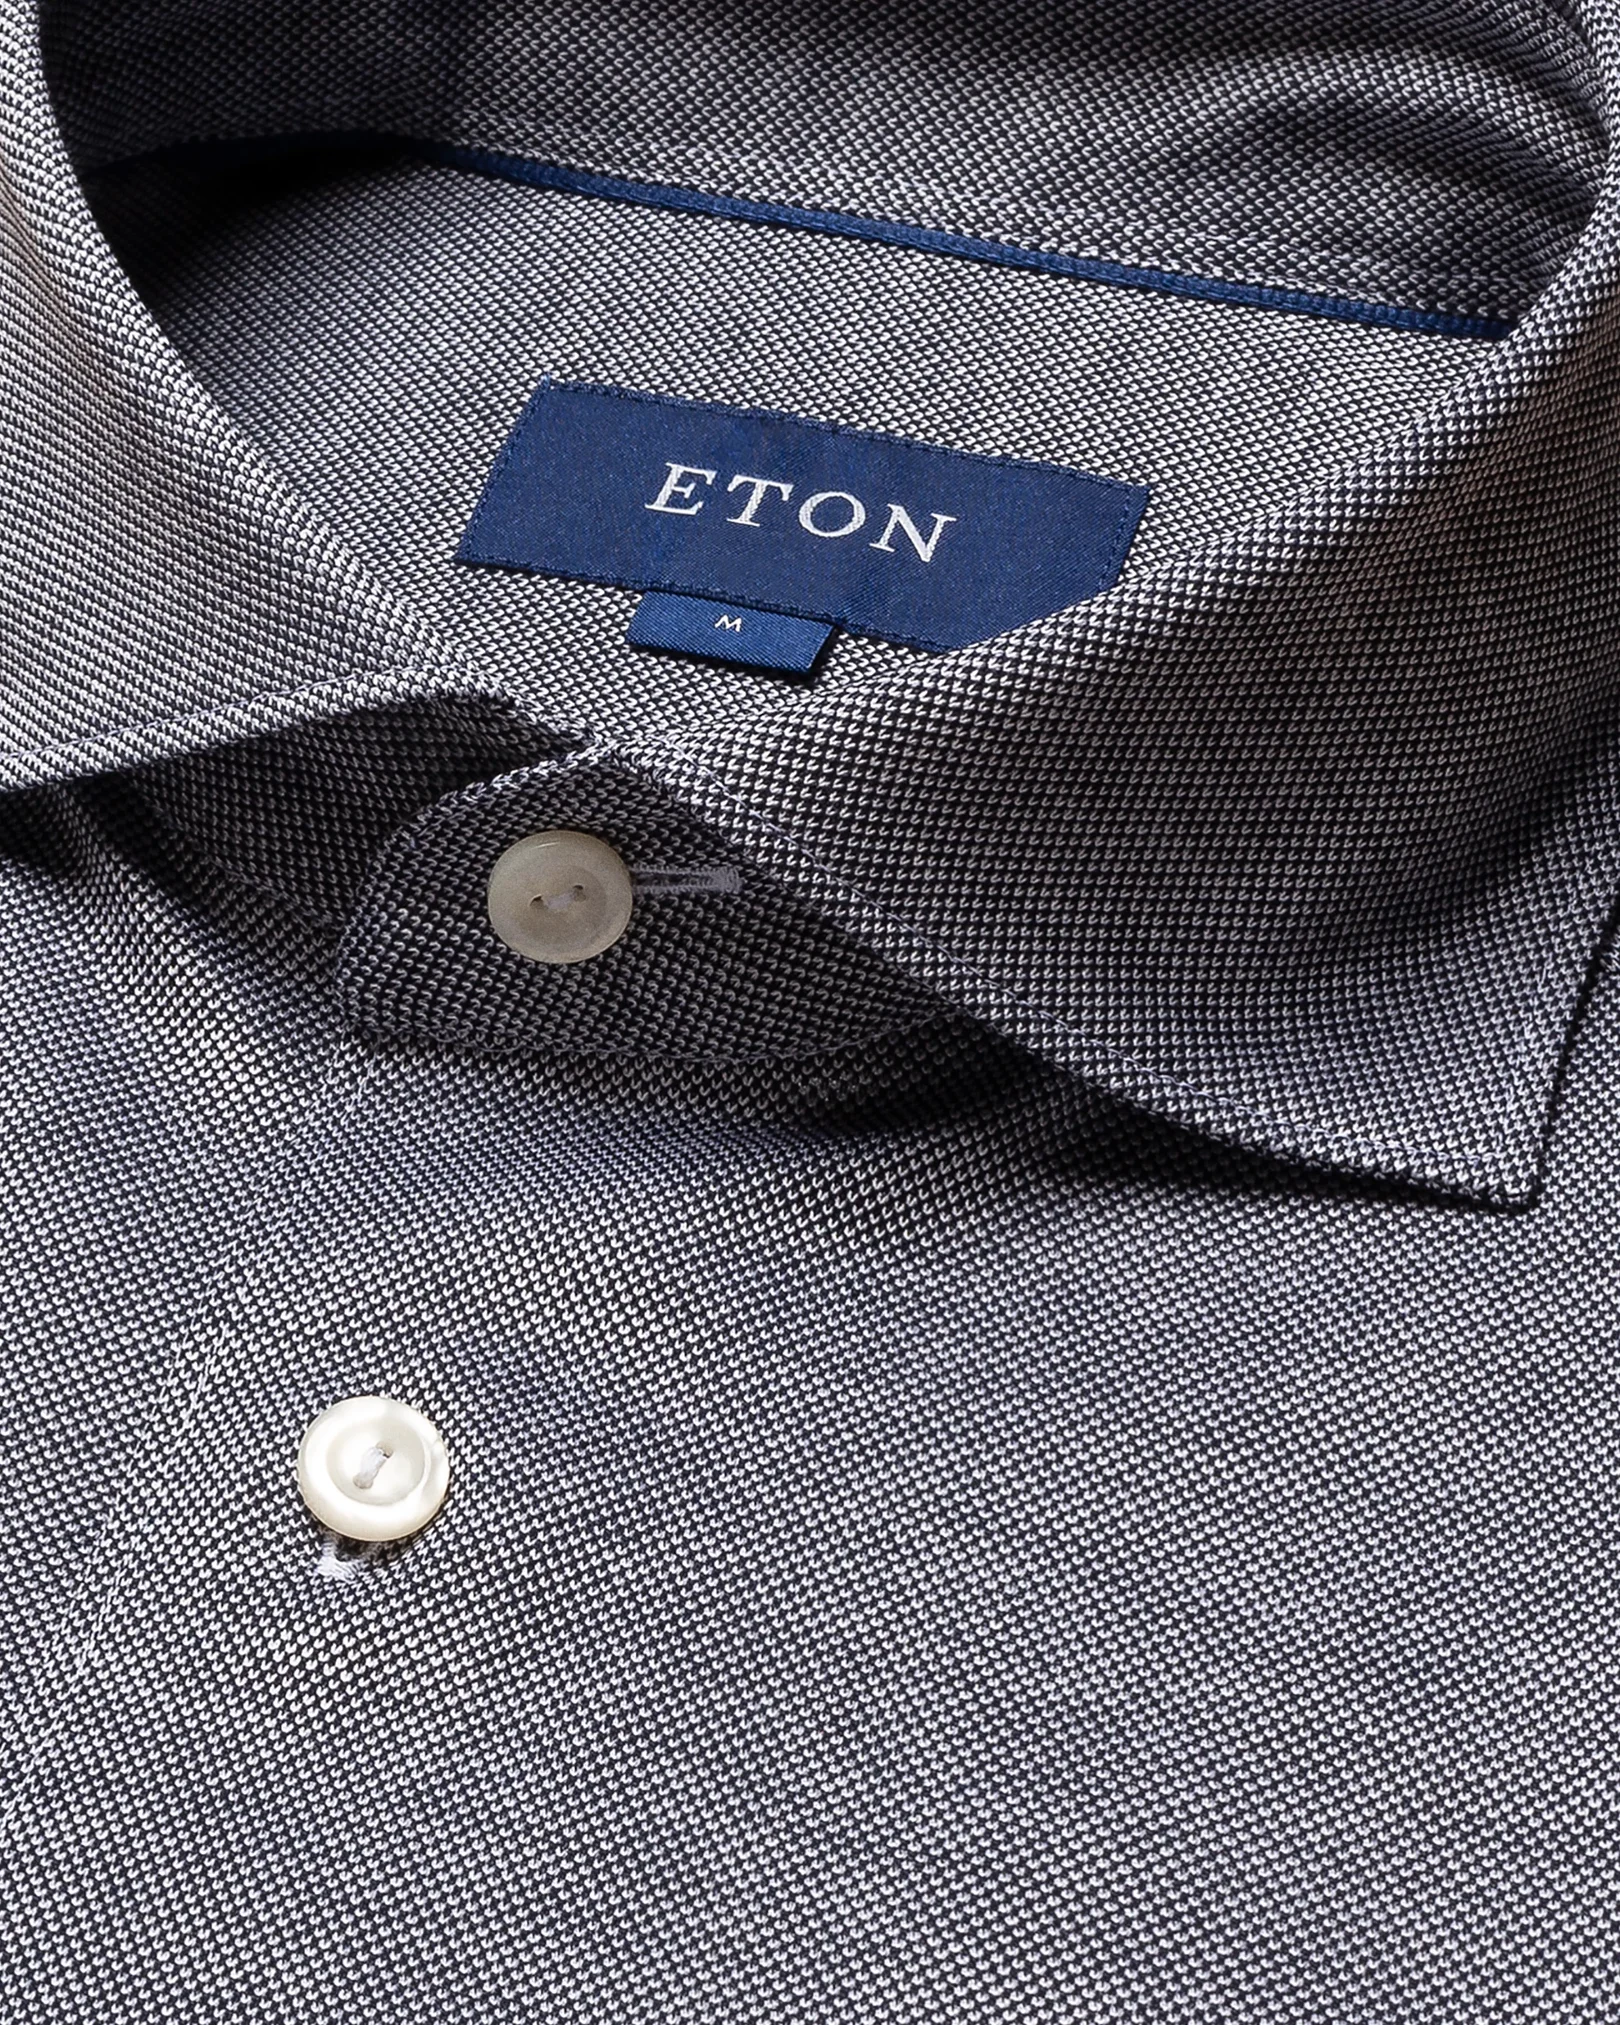 Eton - navy blue knitted jersey